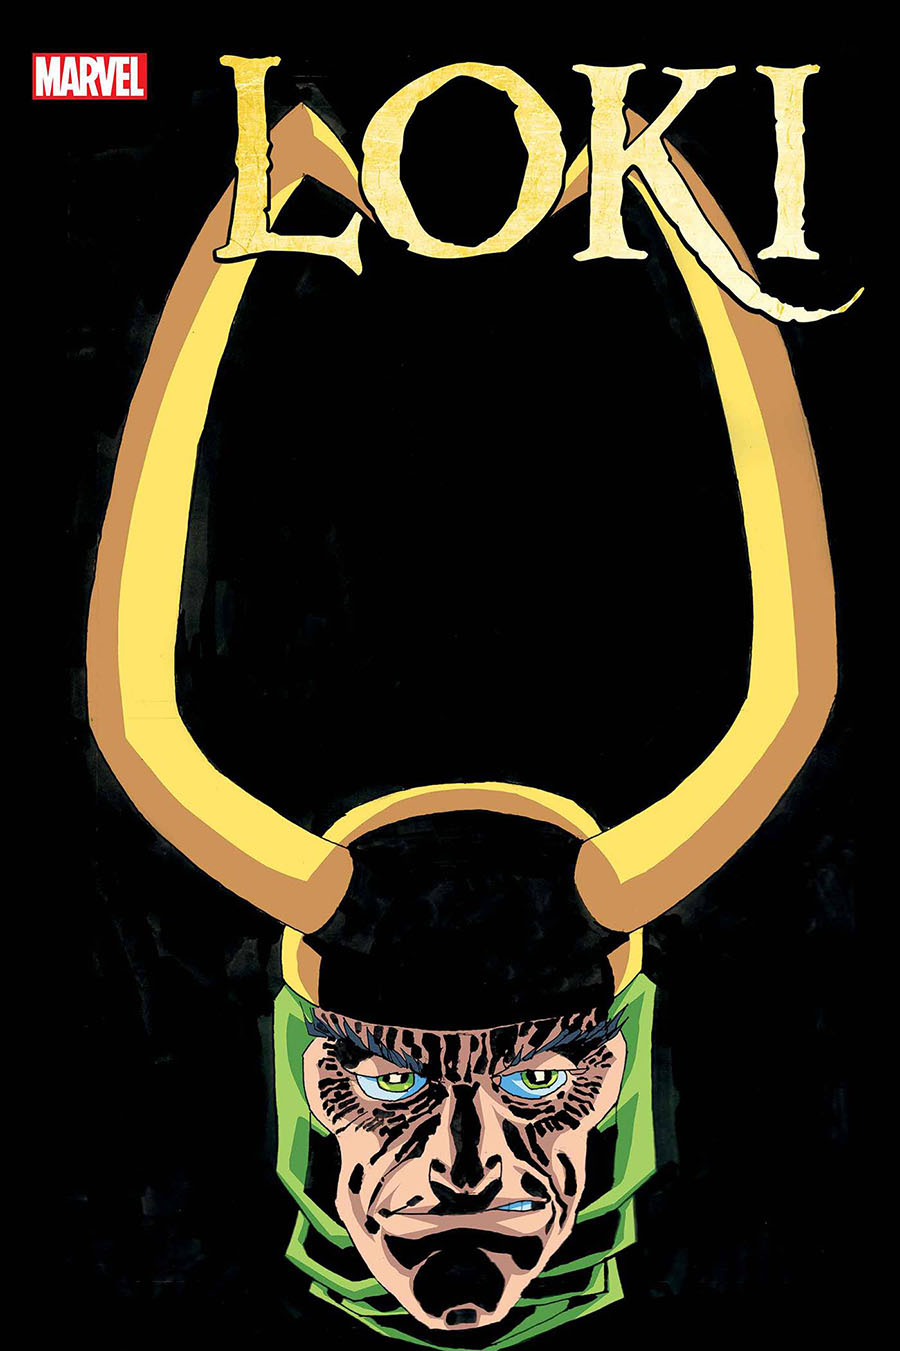 Loki Vol 4 #1 By Frank Miller Poster